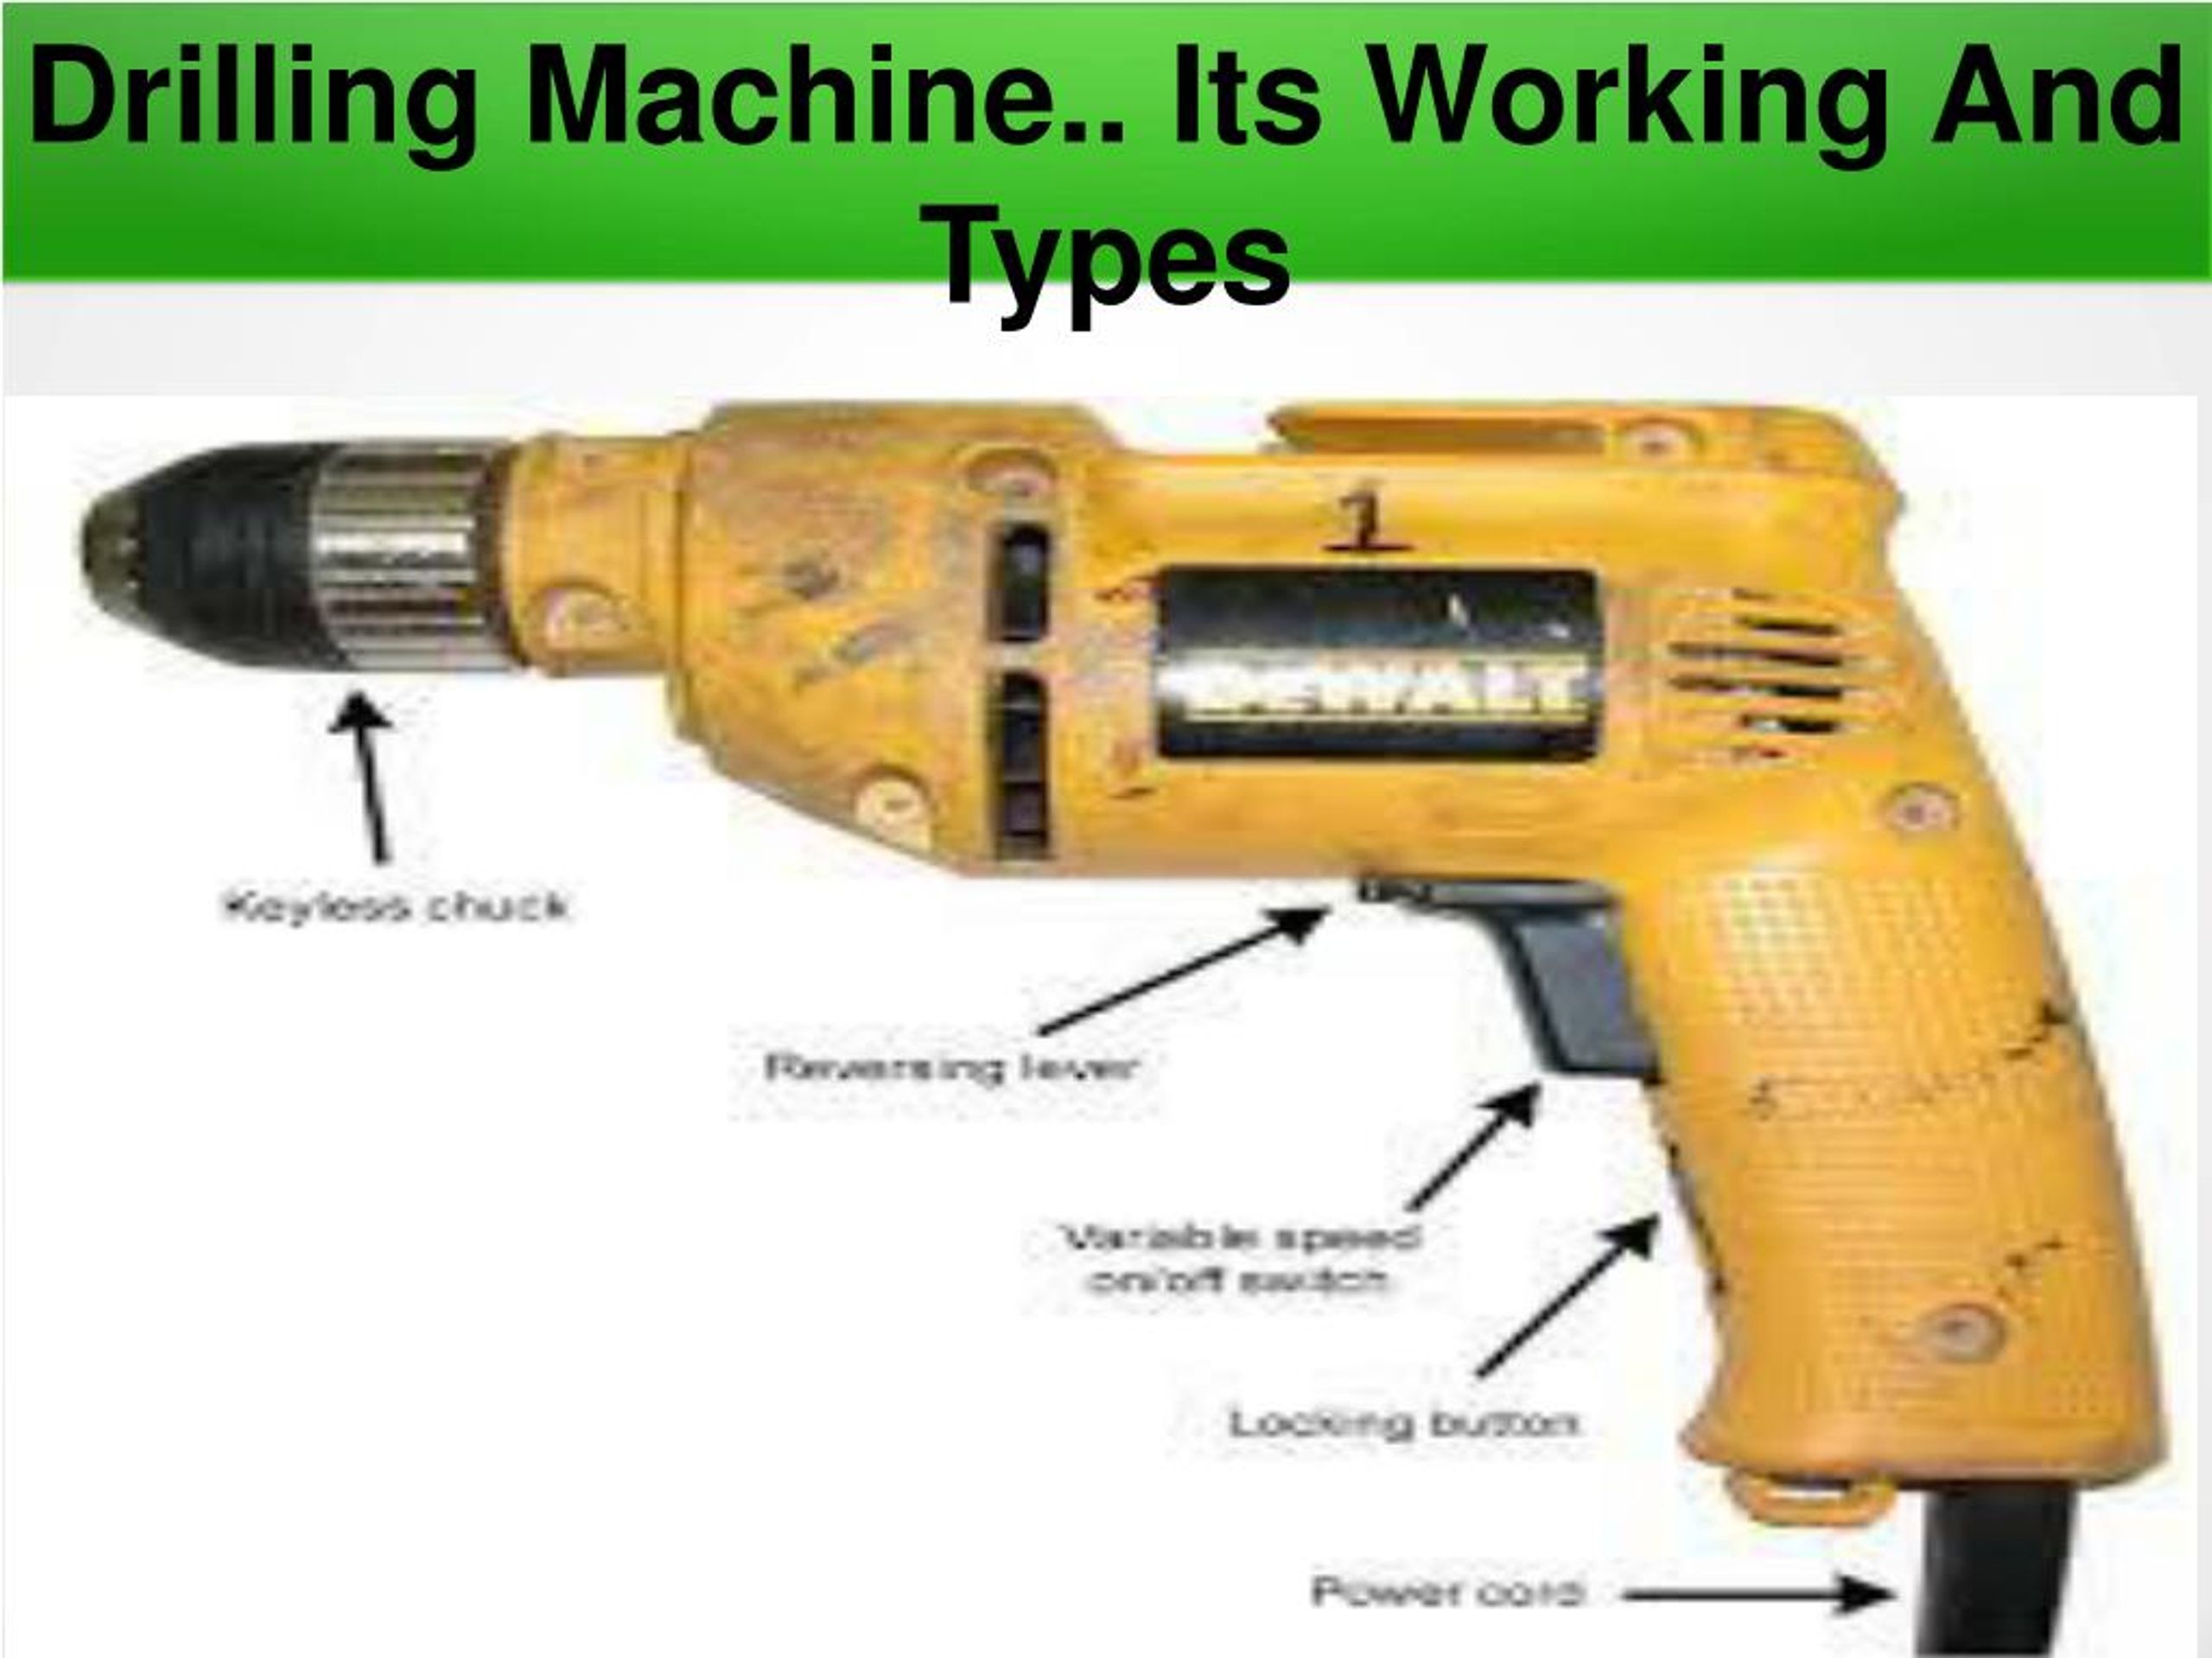 Its machining